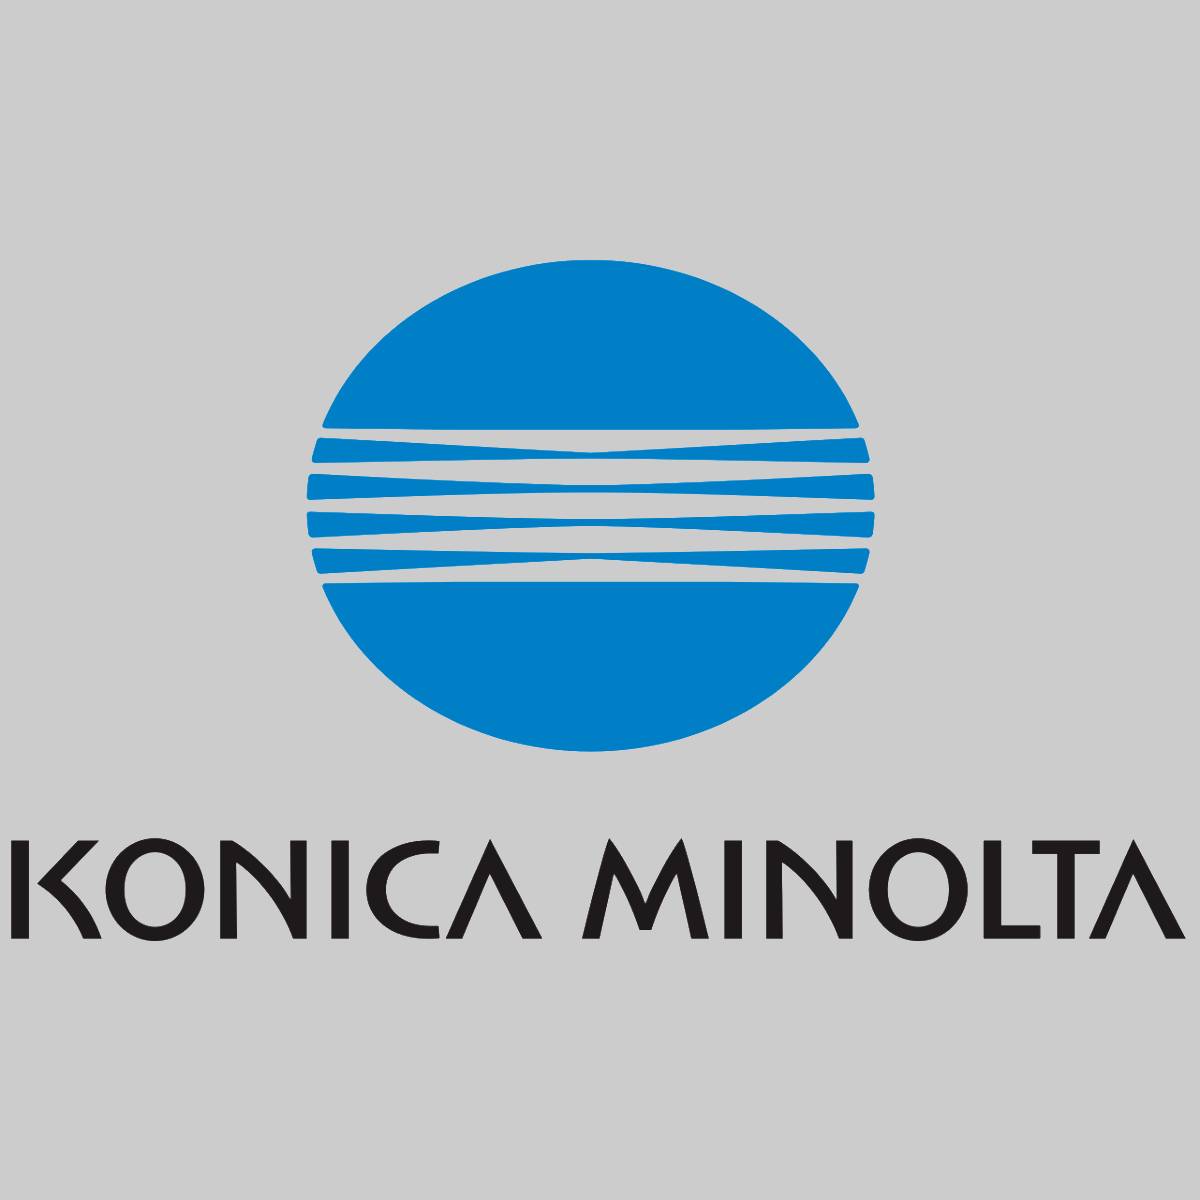 Konica Minolta DV614C Developer Cyan A3VX900 für AccurioPress C 1060 1070 3070